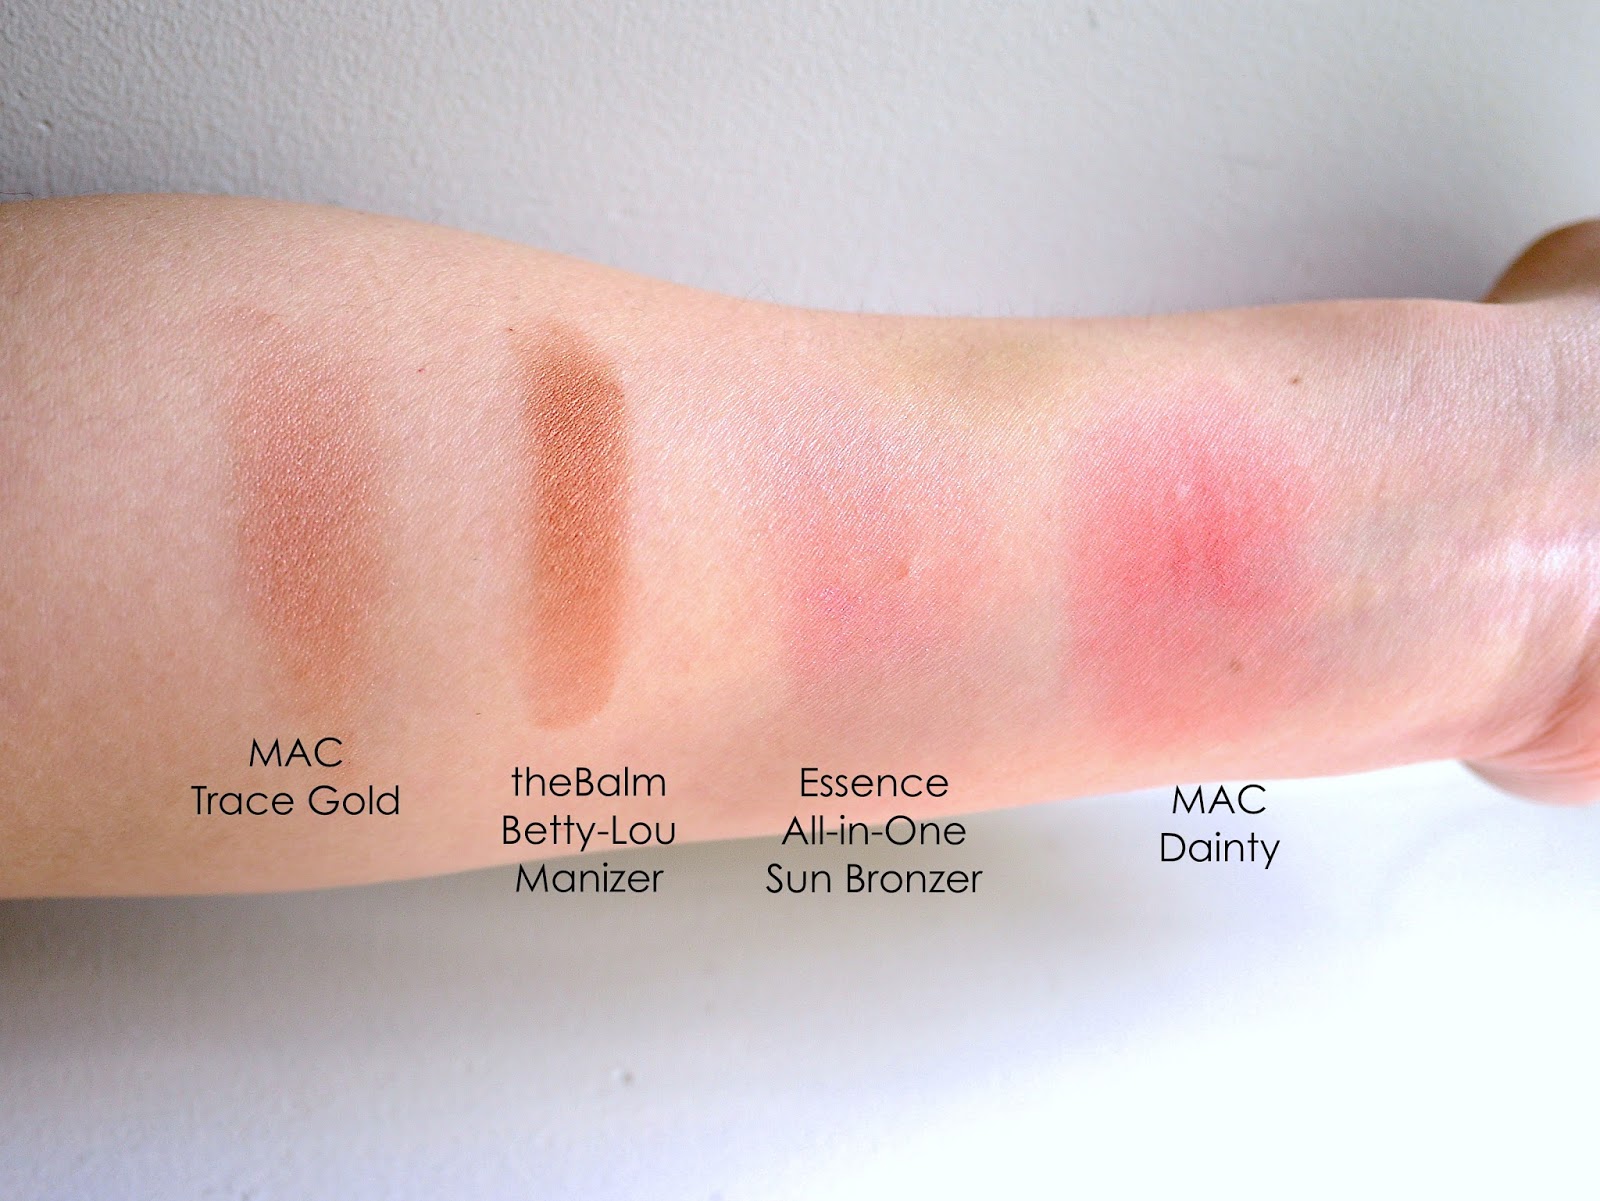 MAC trace gold theBalm Betty-Lou Manizer Essence All-in-One Sun Bronzer Mac Dainty blush swatch